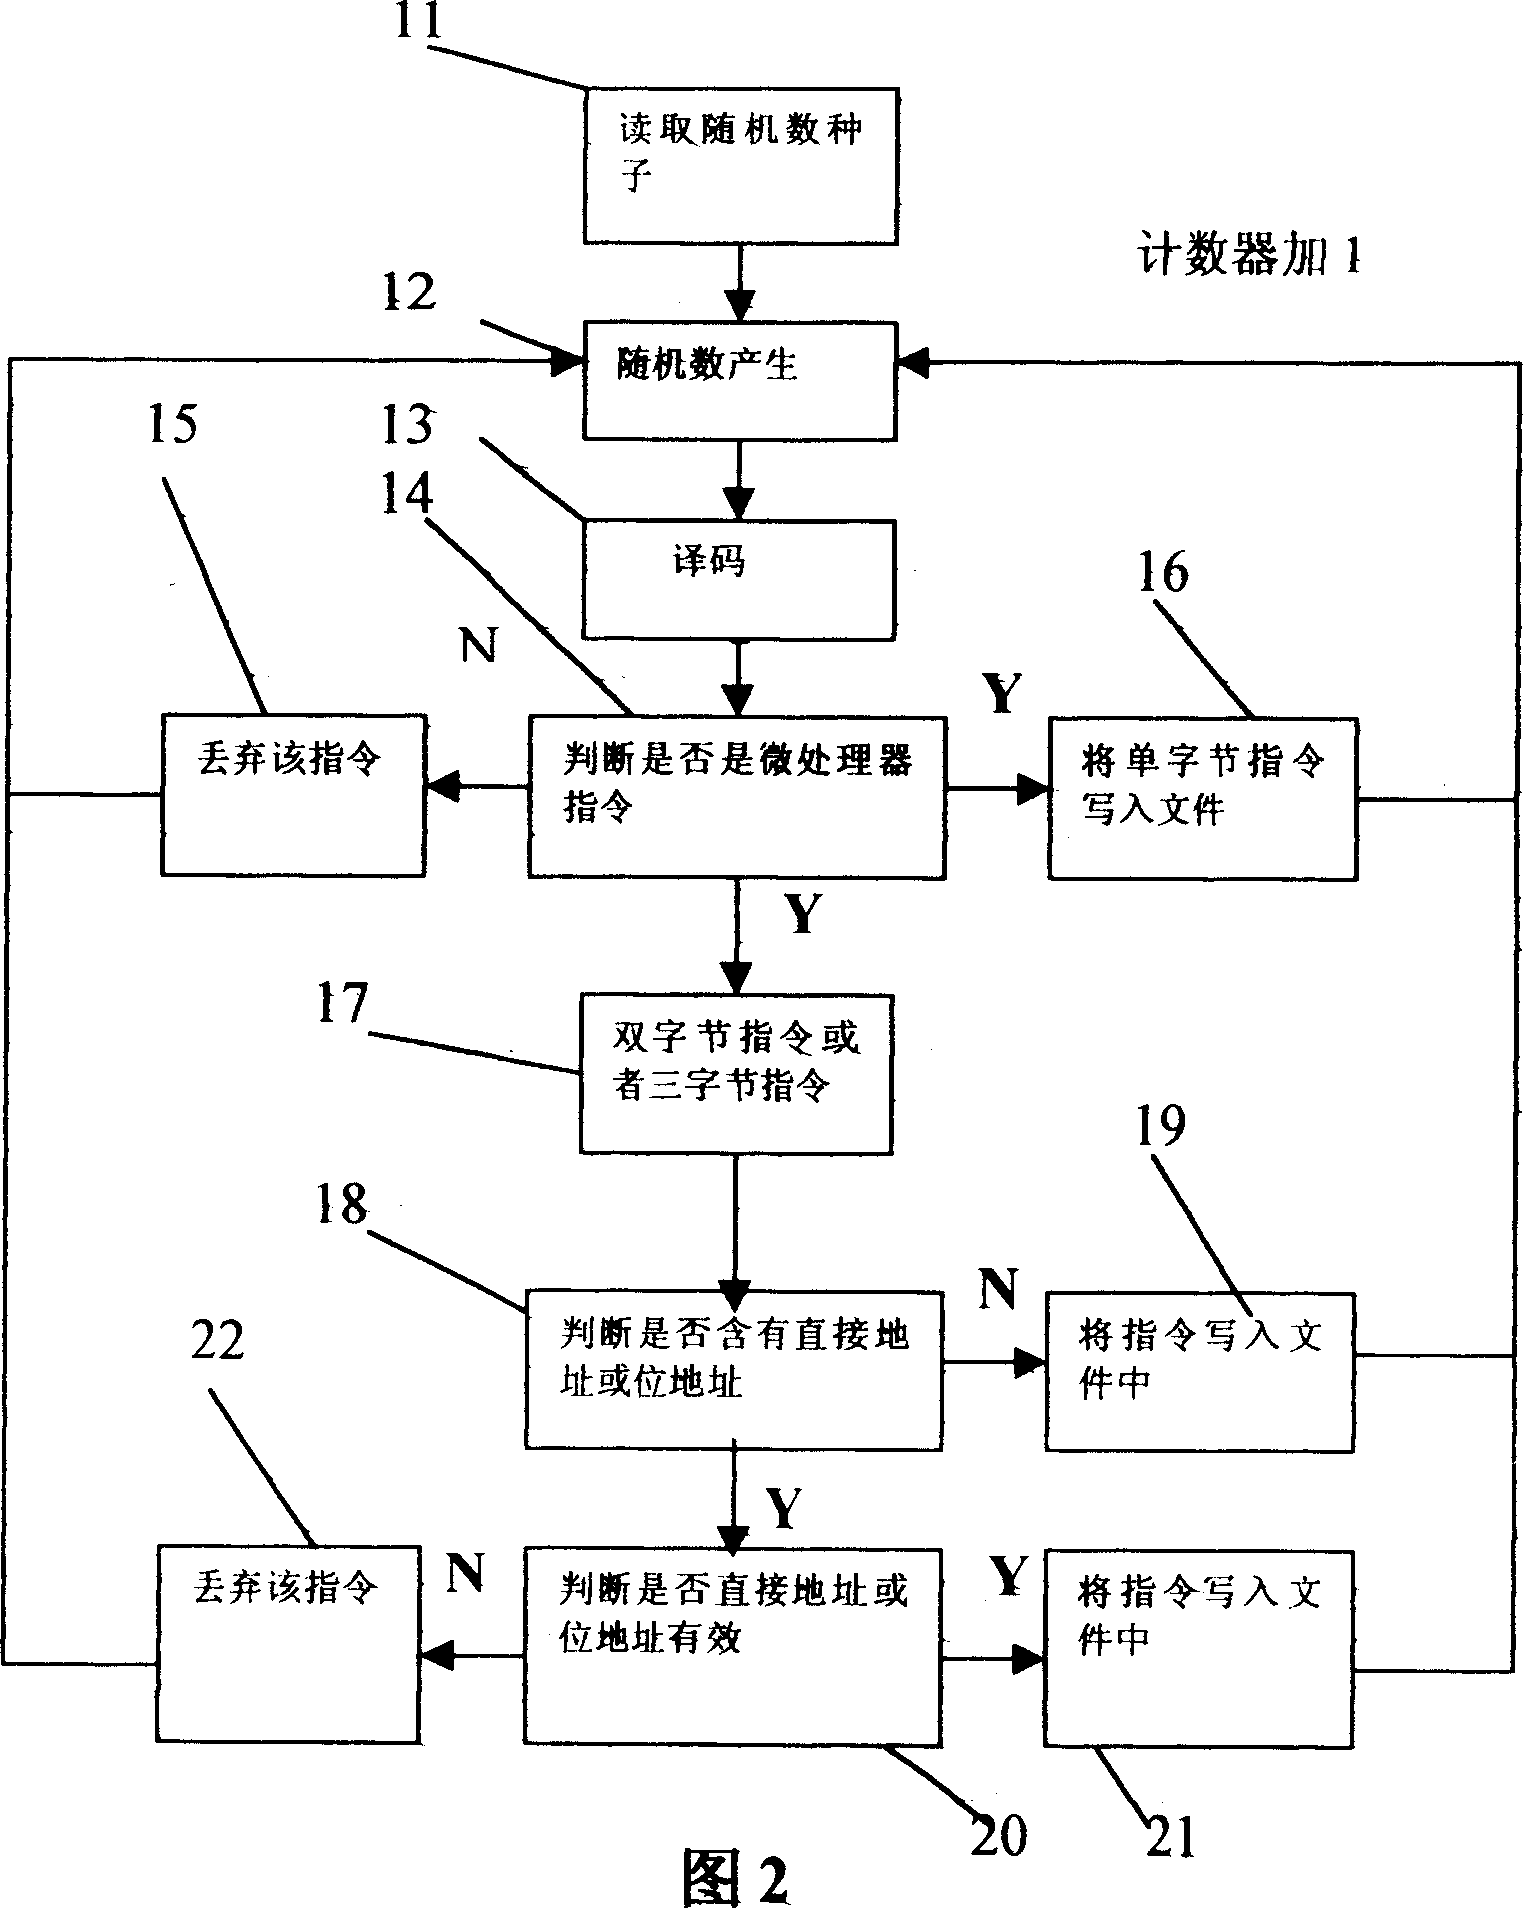 Random testing method of microprocessor